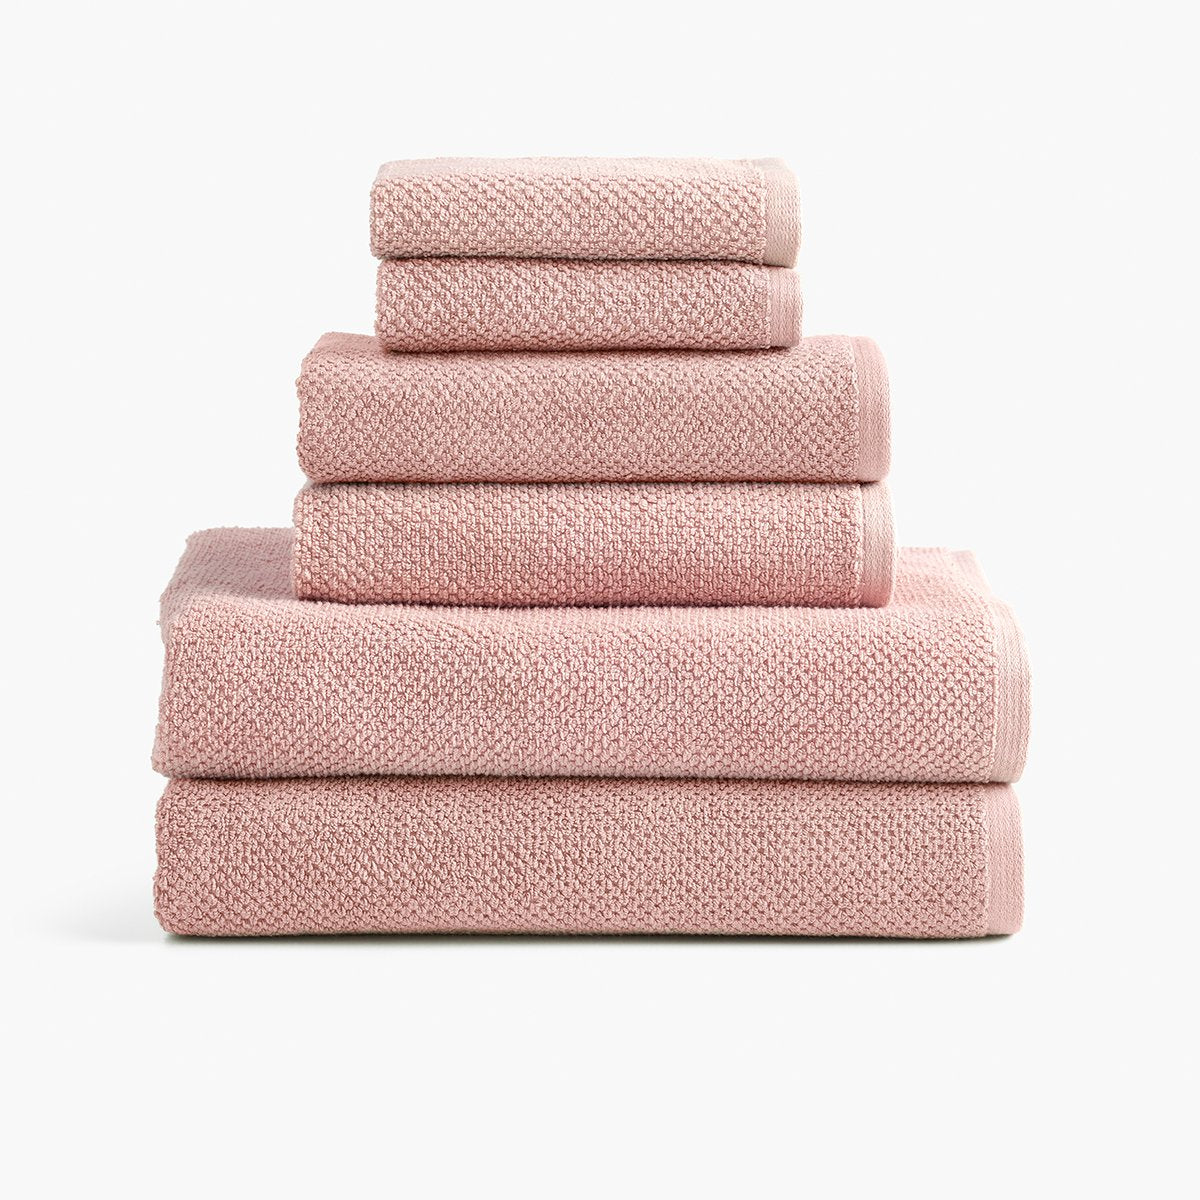 Pale Pink Linen Tea Towel Thick and Durable Kitchen Towel Cotton